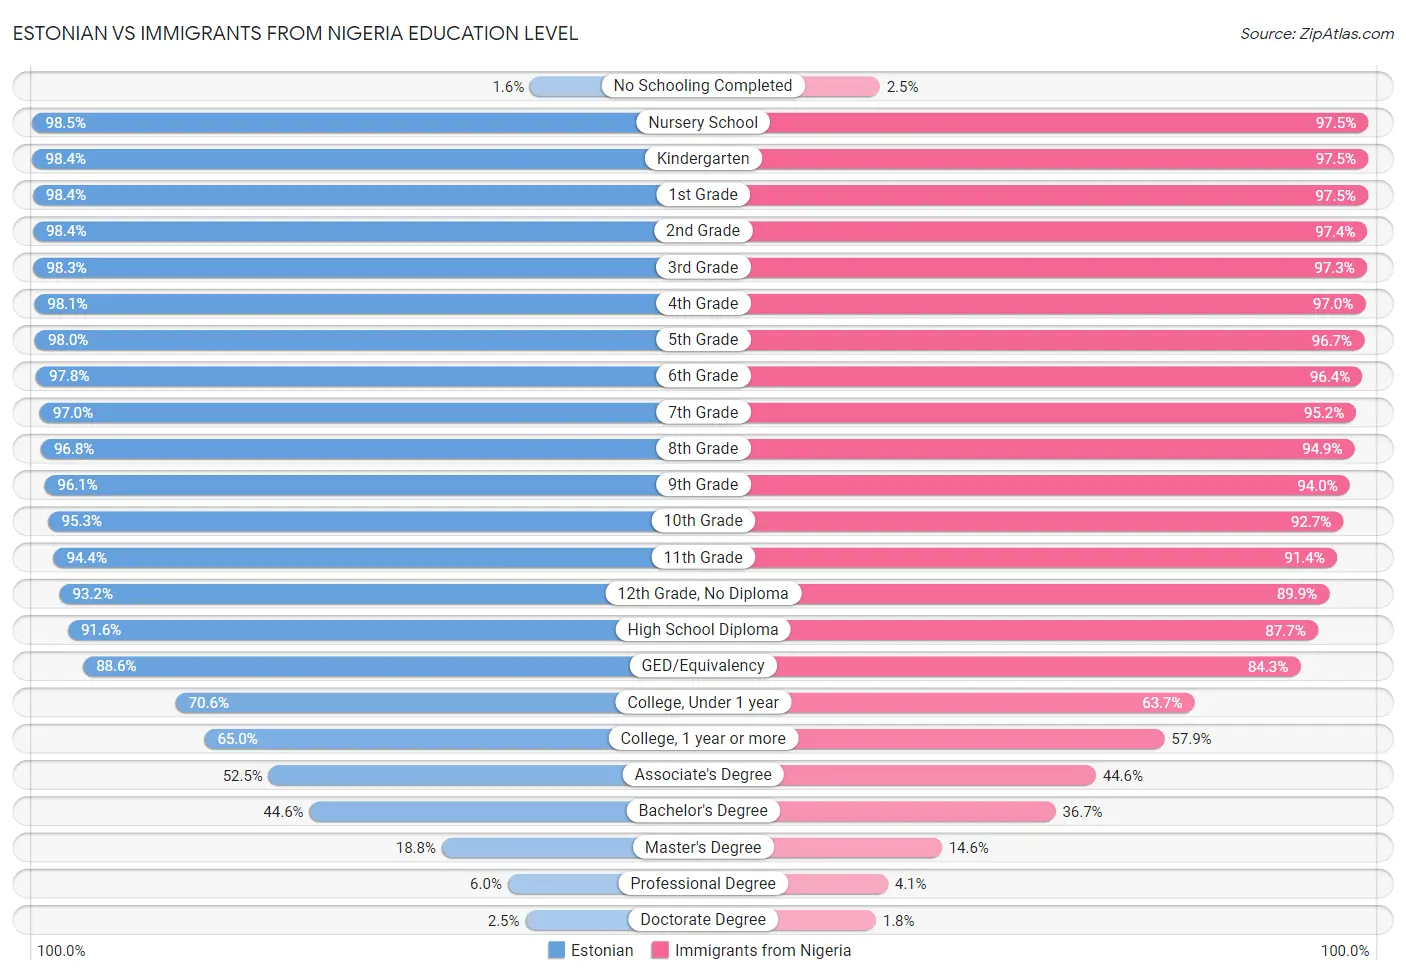 Estonian vs Immigrants from Nigeria Education Level